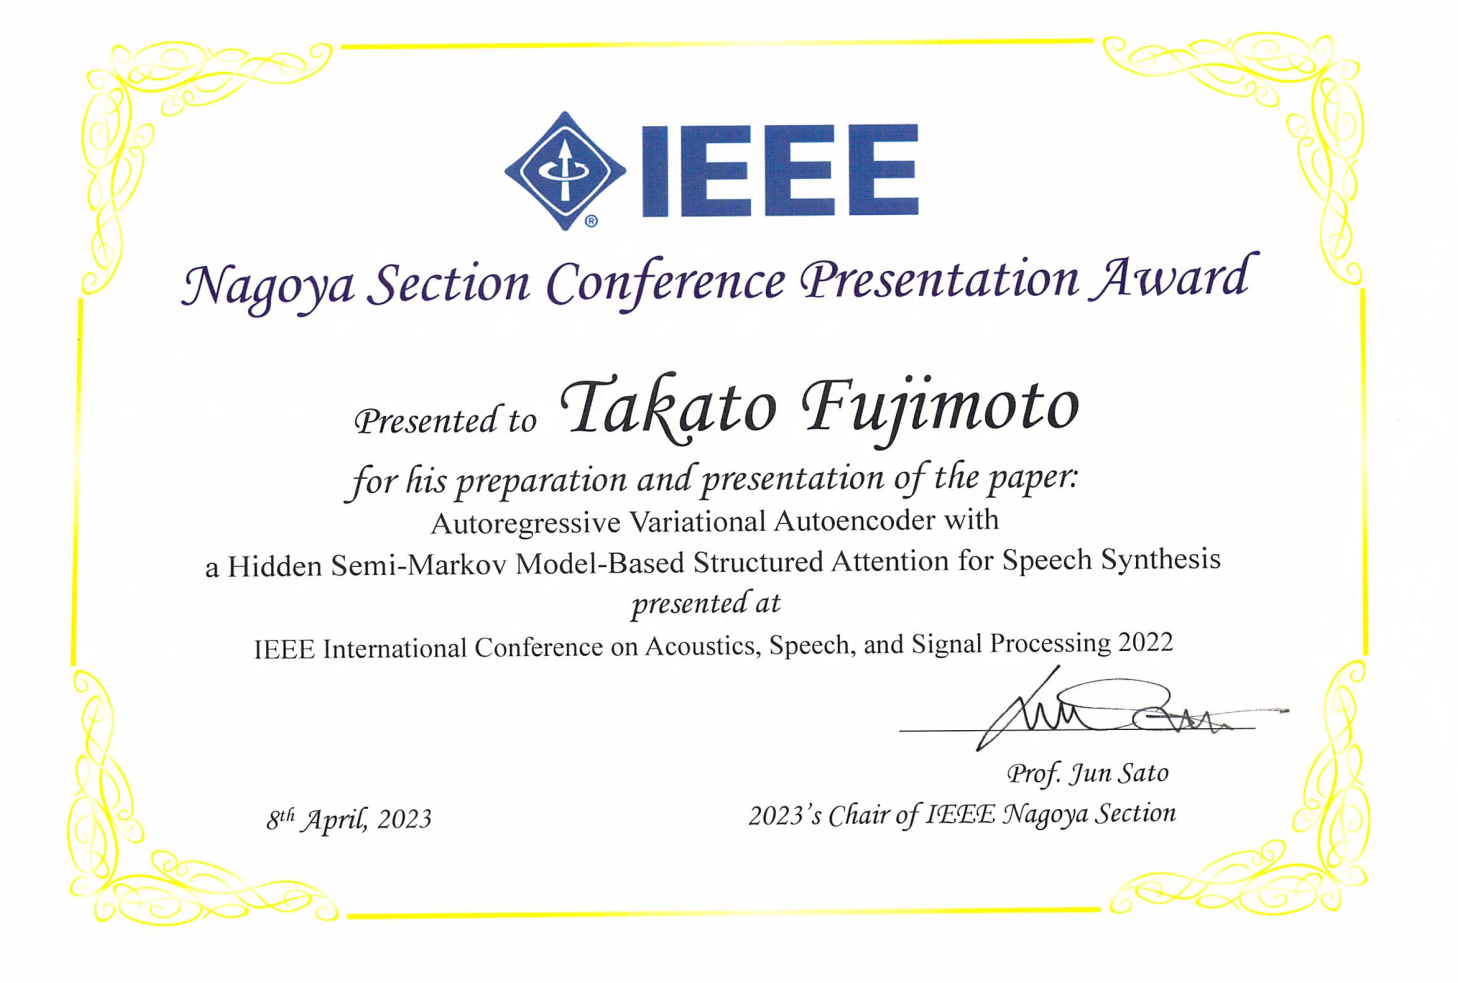 ieee_nagoya_section_conference_presentation_award_2023.png